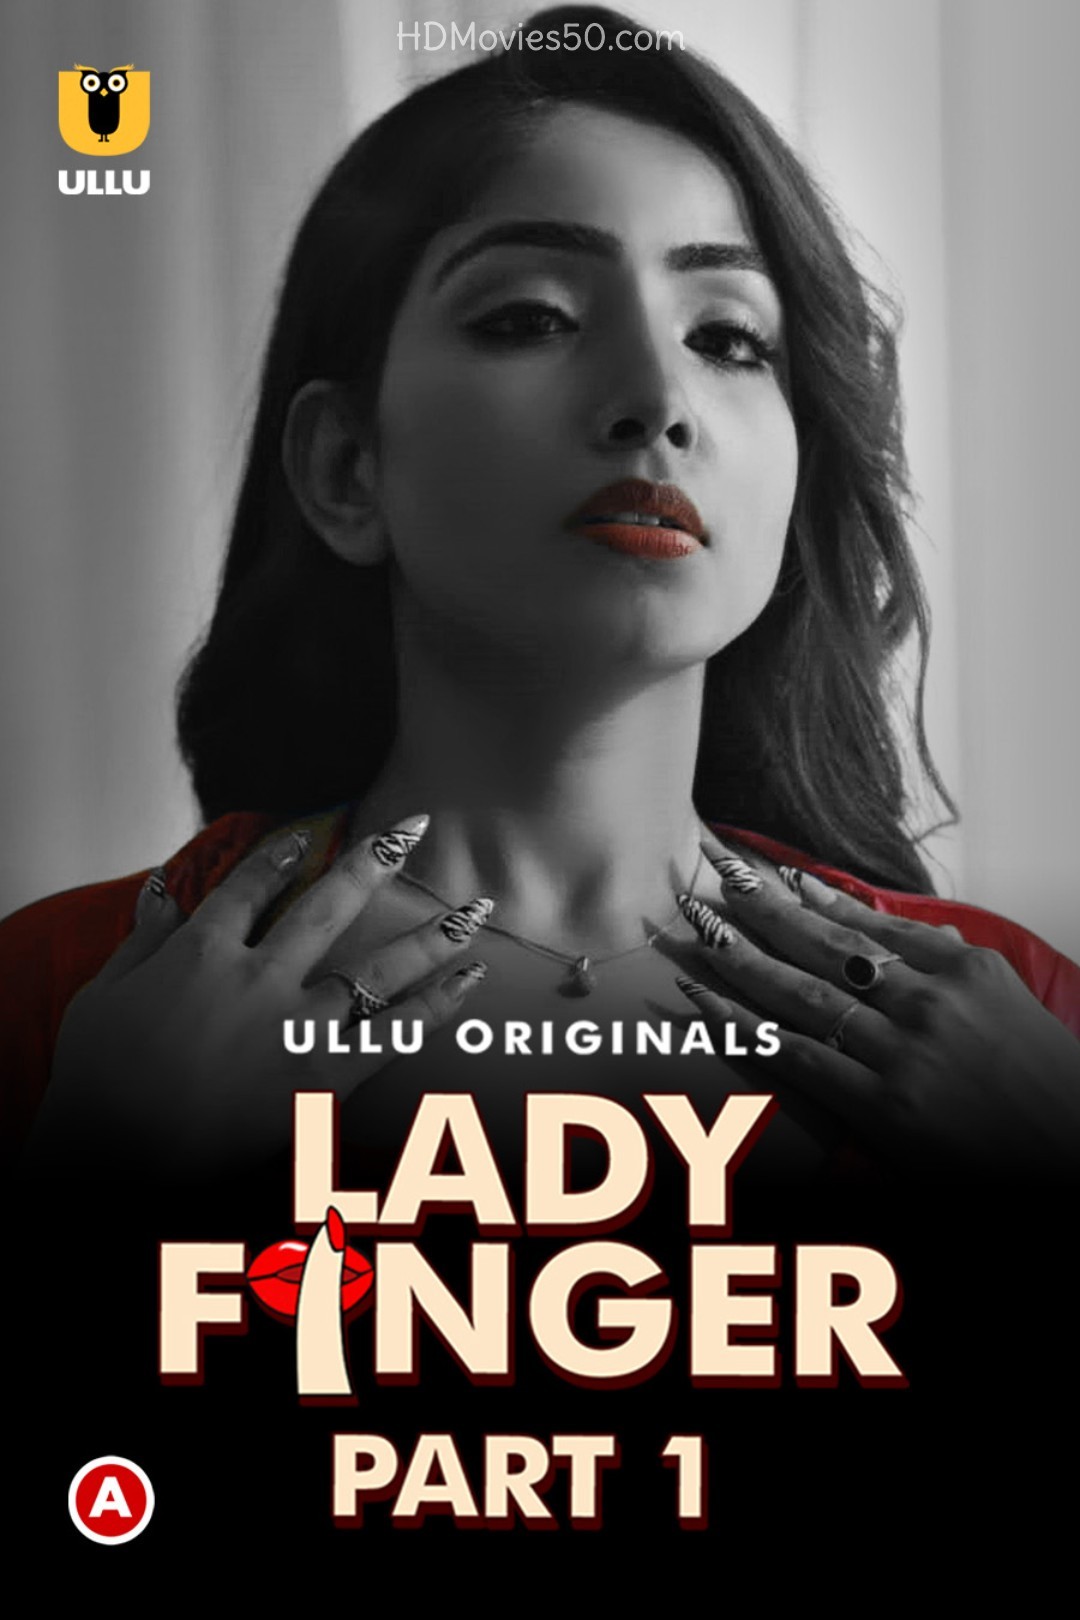 Lady Finger Part 1 (2022) 1080p HDRip Ullu Hindi Web Series [800MB]